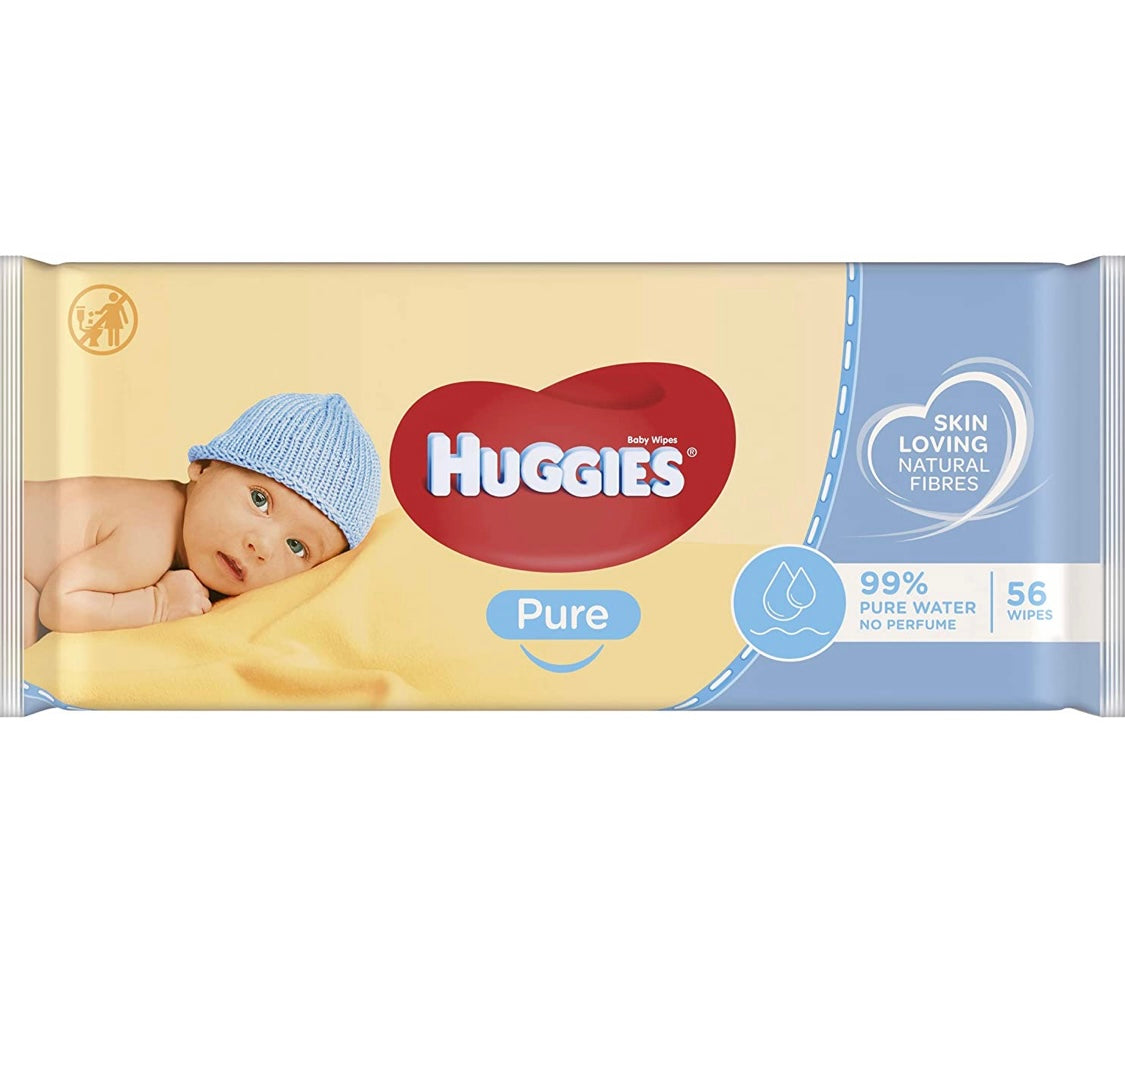 Huggies Pure Baby Wipes, 56 Wipes